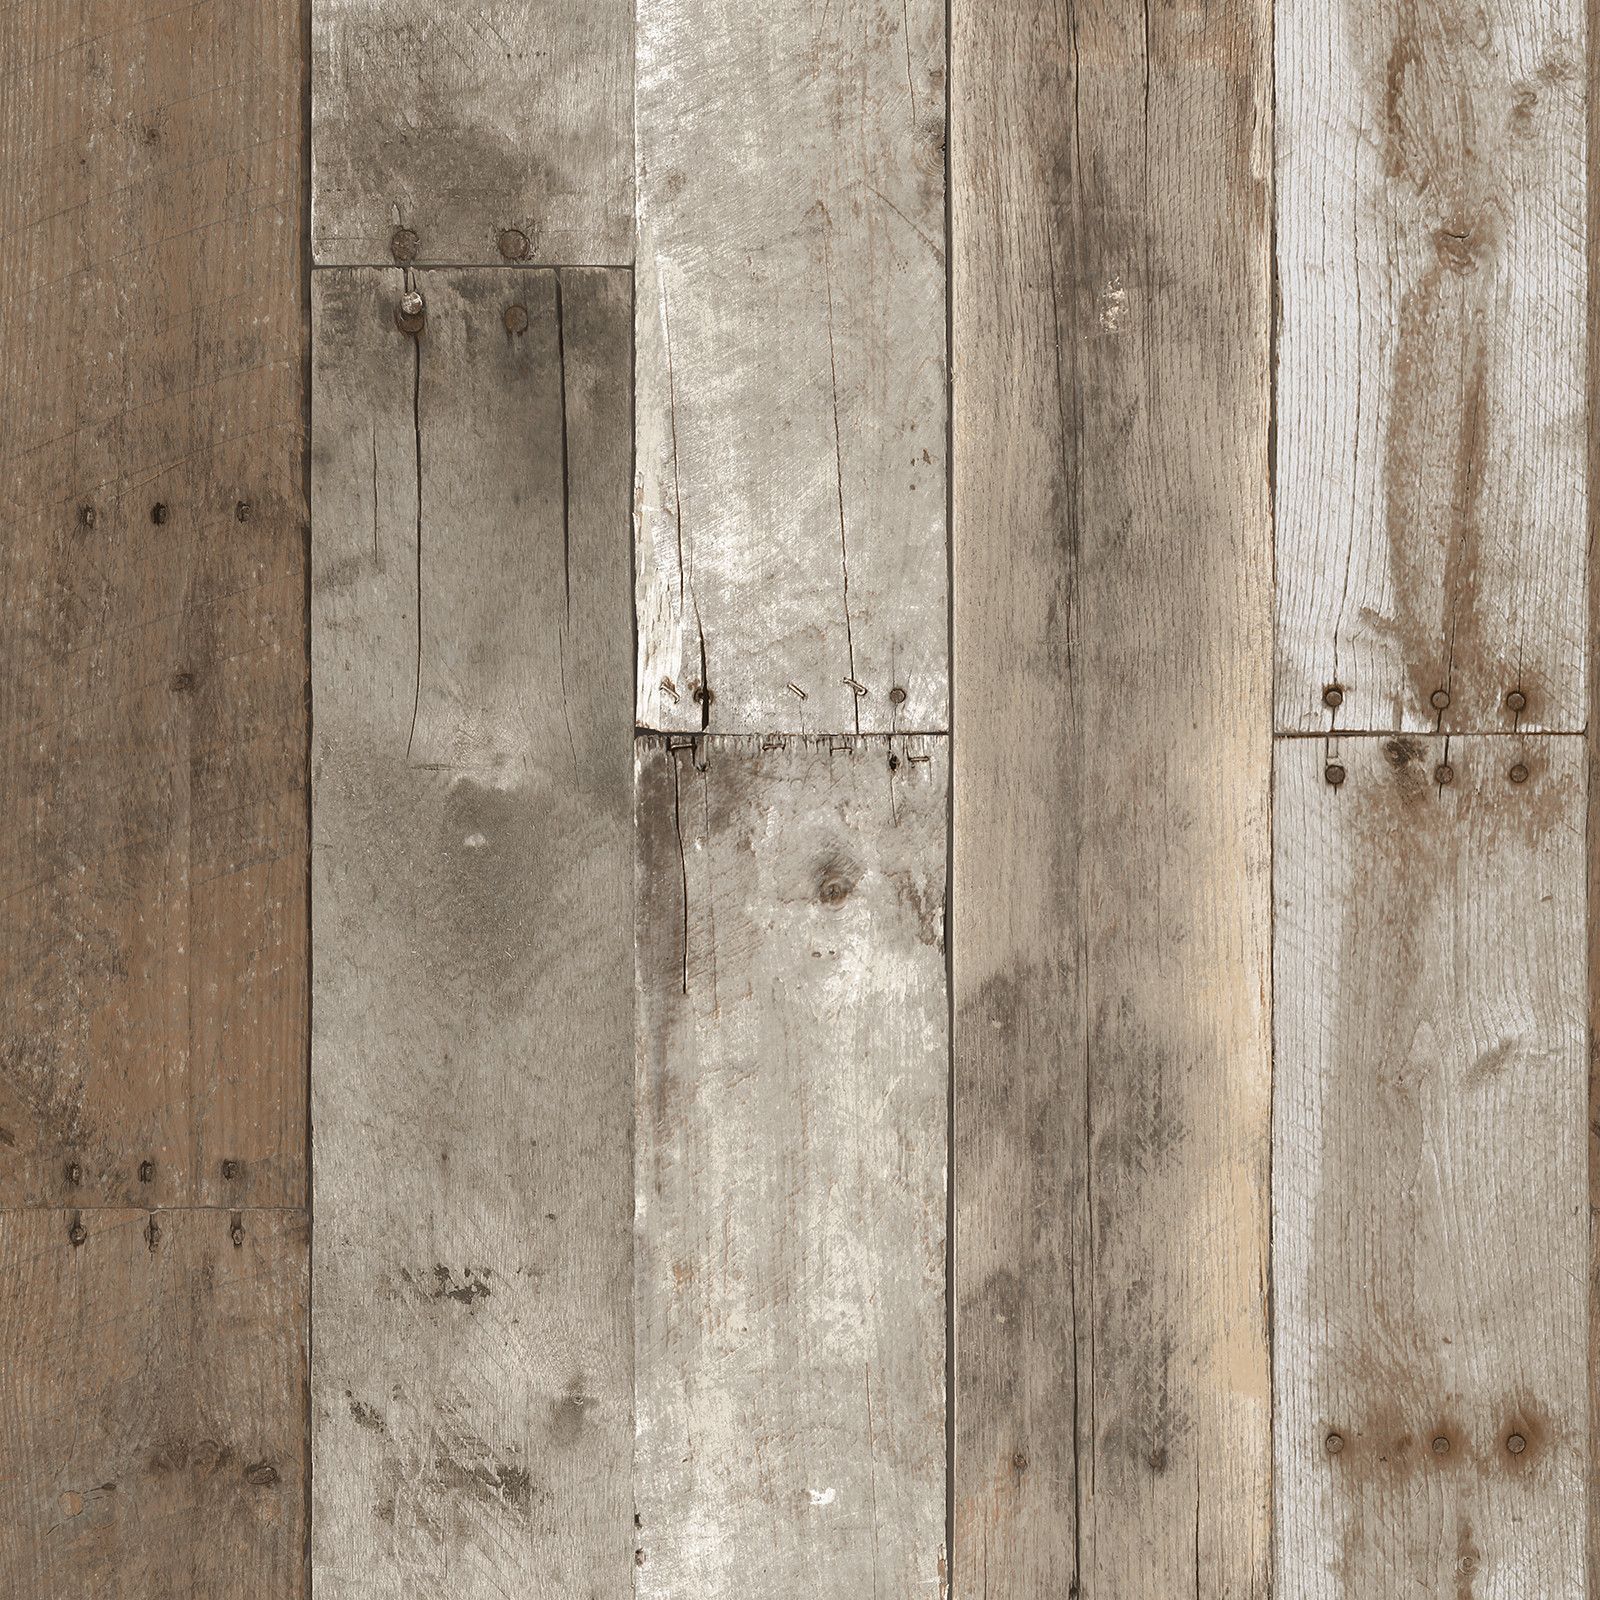 Repurposed Wood Weathered Textured Self Adhesive Wallpaper by